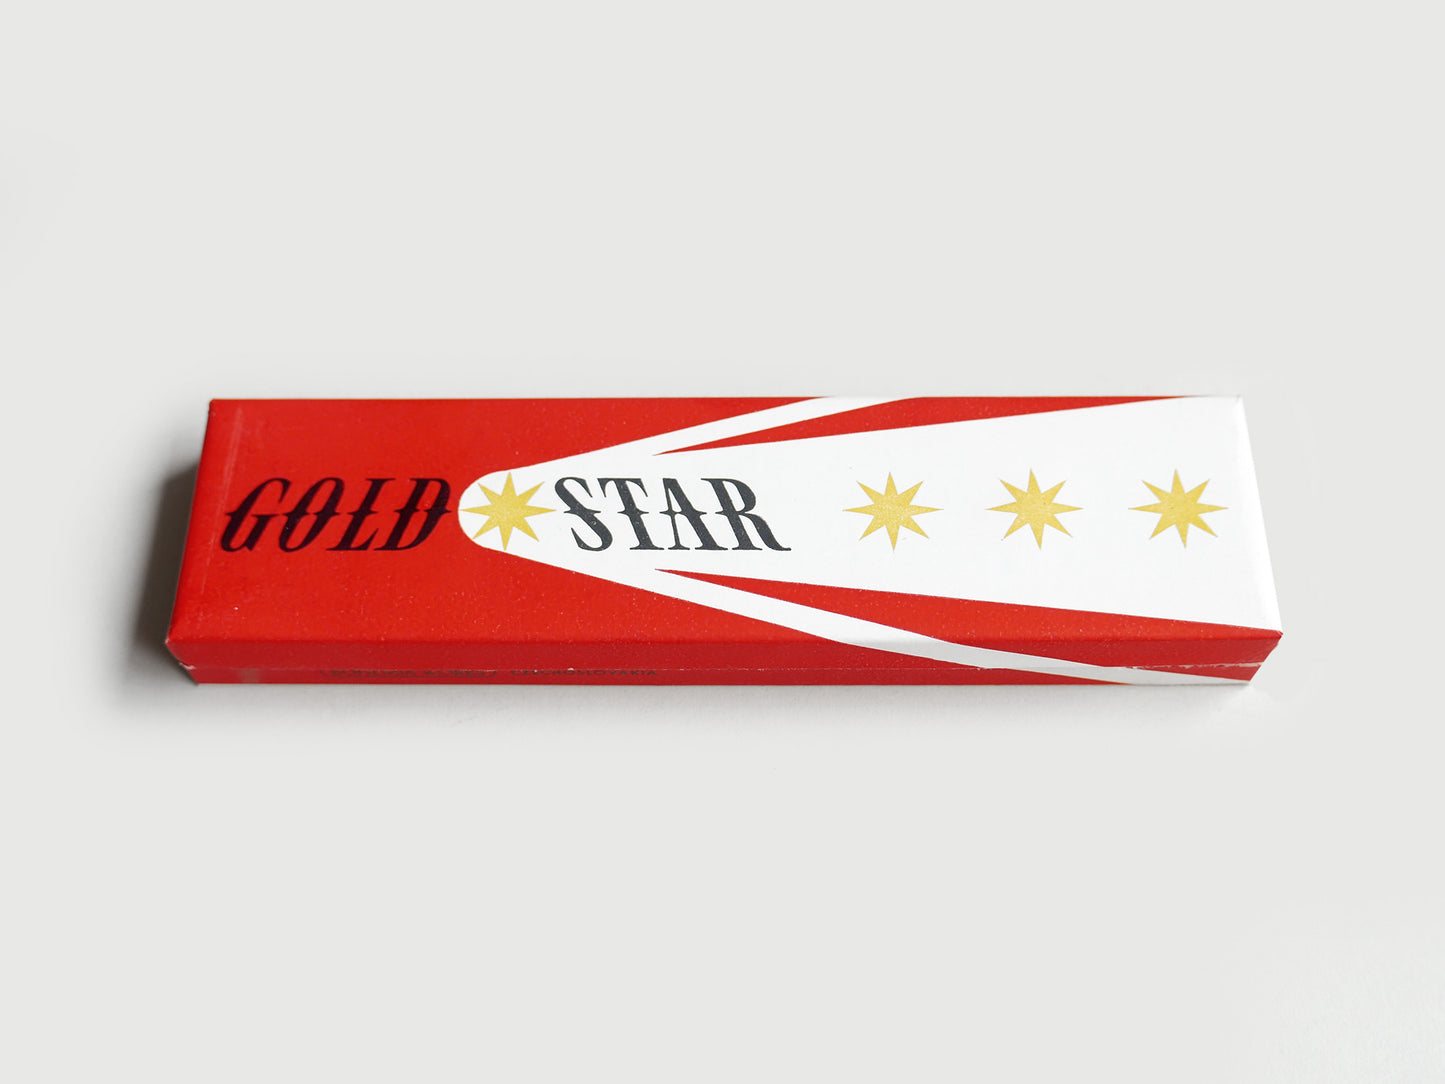 Gold Star Pencils (1960s)